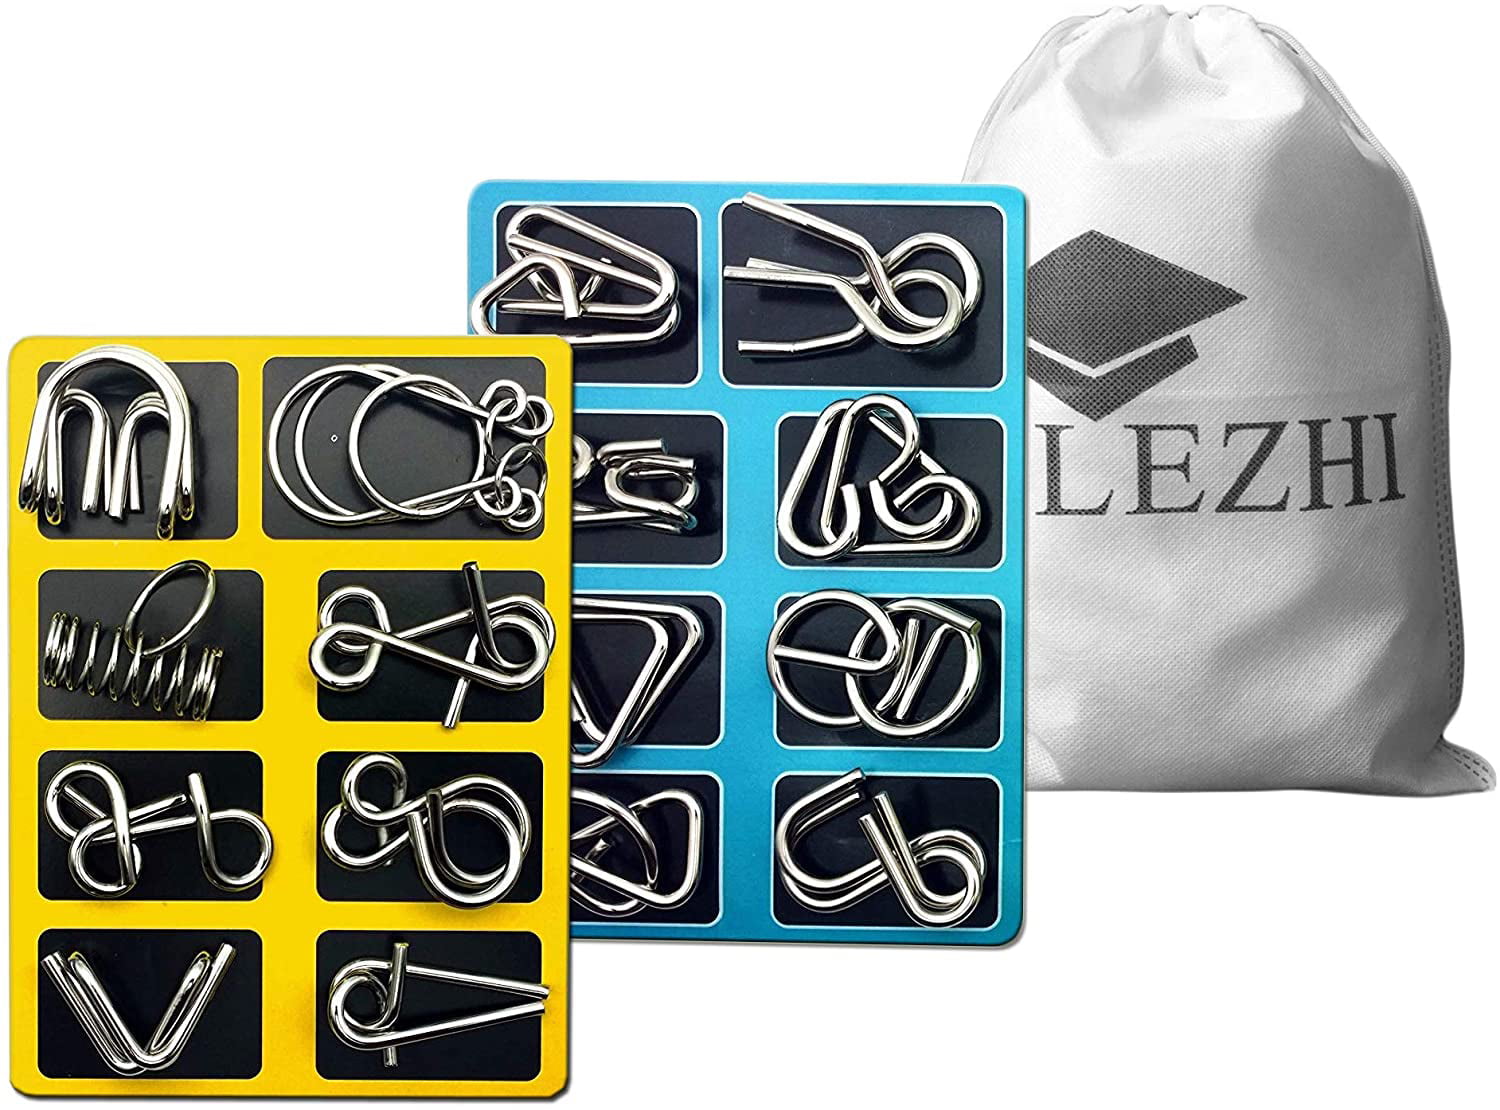 Pack of 16 Lezhi IQ Toys-AB A+B Test Mind Game Brain Teaser Wire Magic Trick 